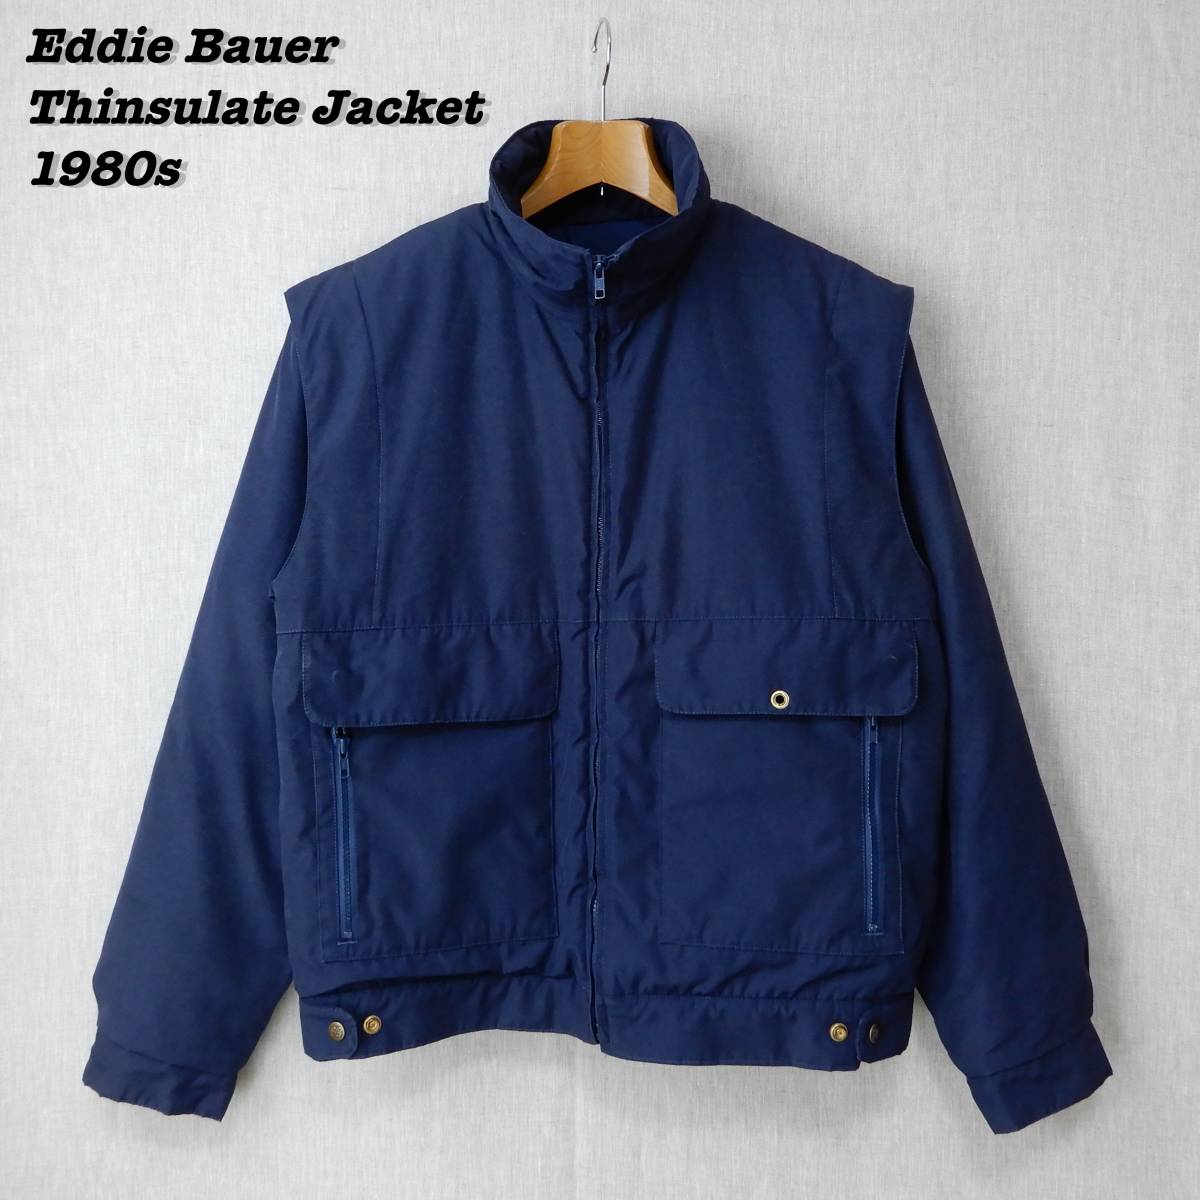 Eddie Bauer Thinsulate Jacket 1980s Vintage エディーバウアー シンサレートジャケット ダウンジャケット 1980年代 ヴィンテージ